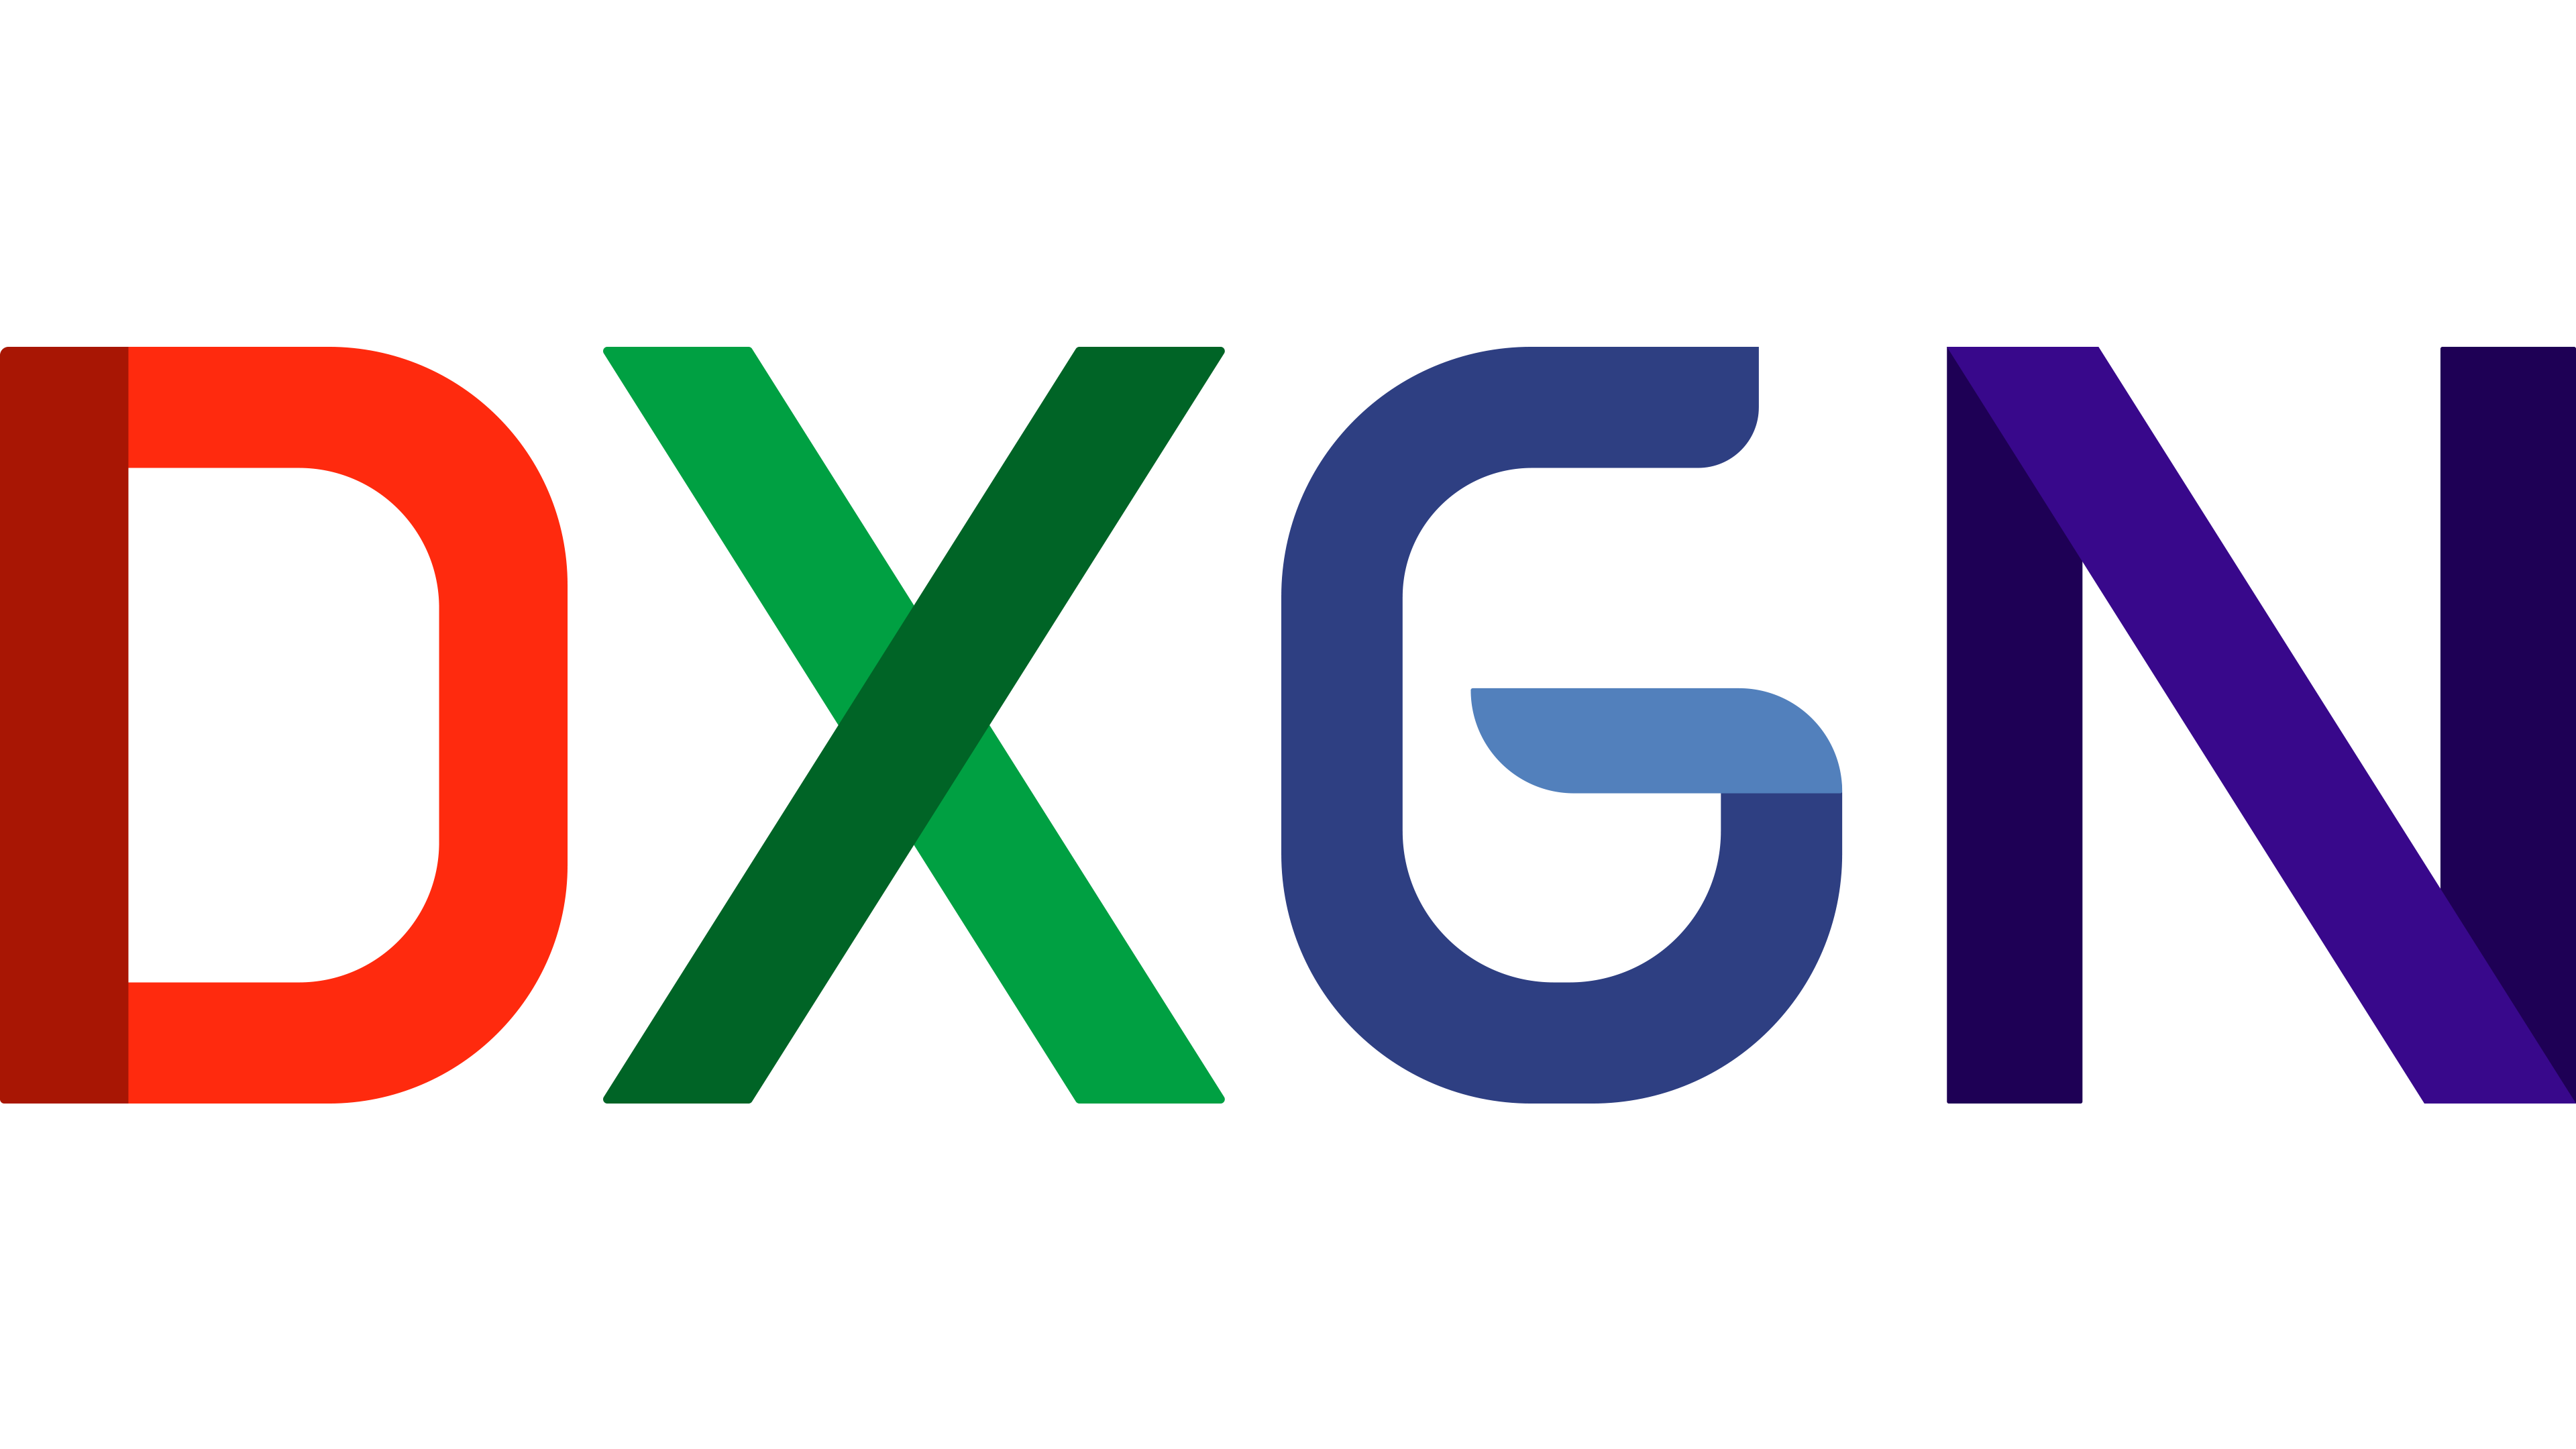 Design News Exchange Network